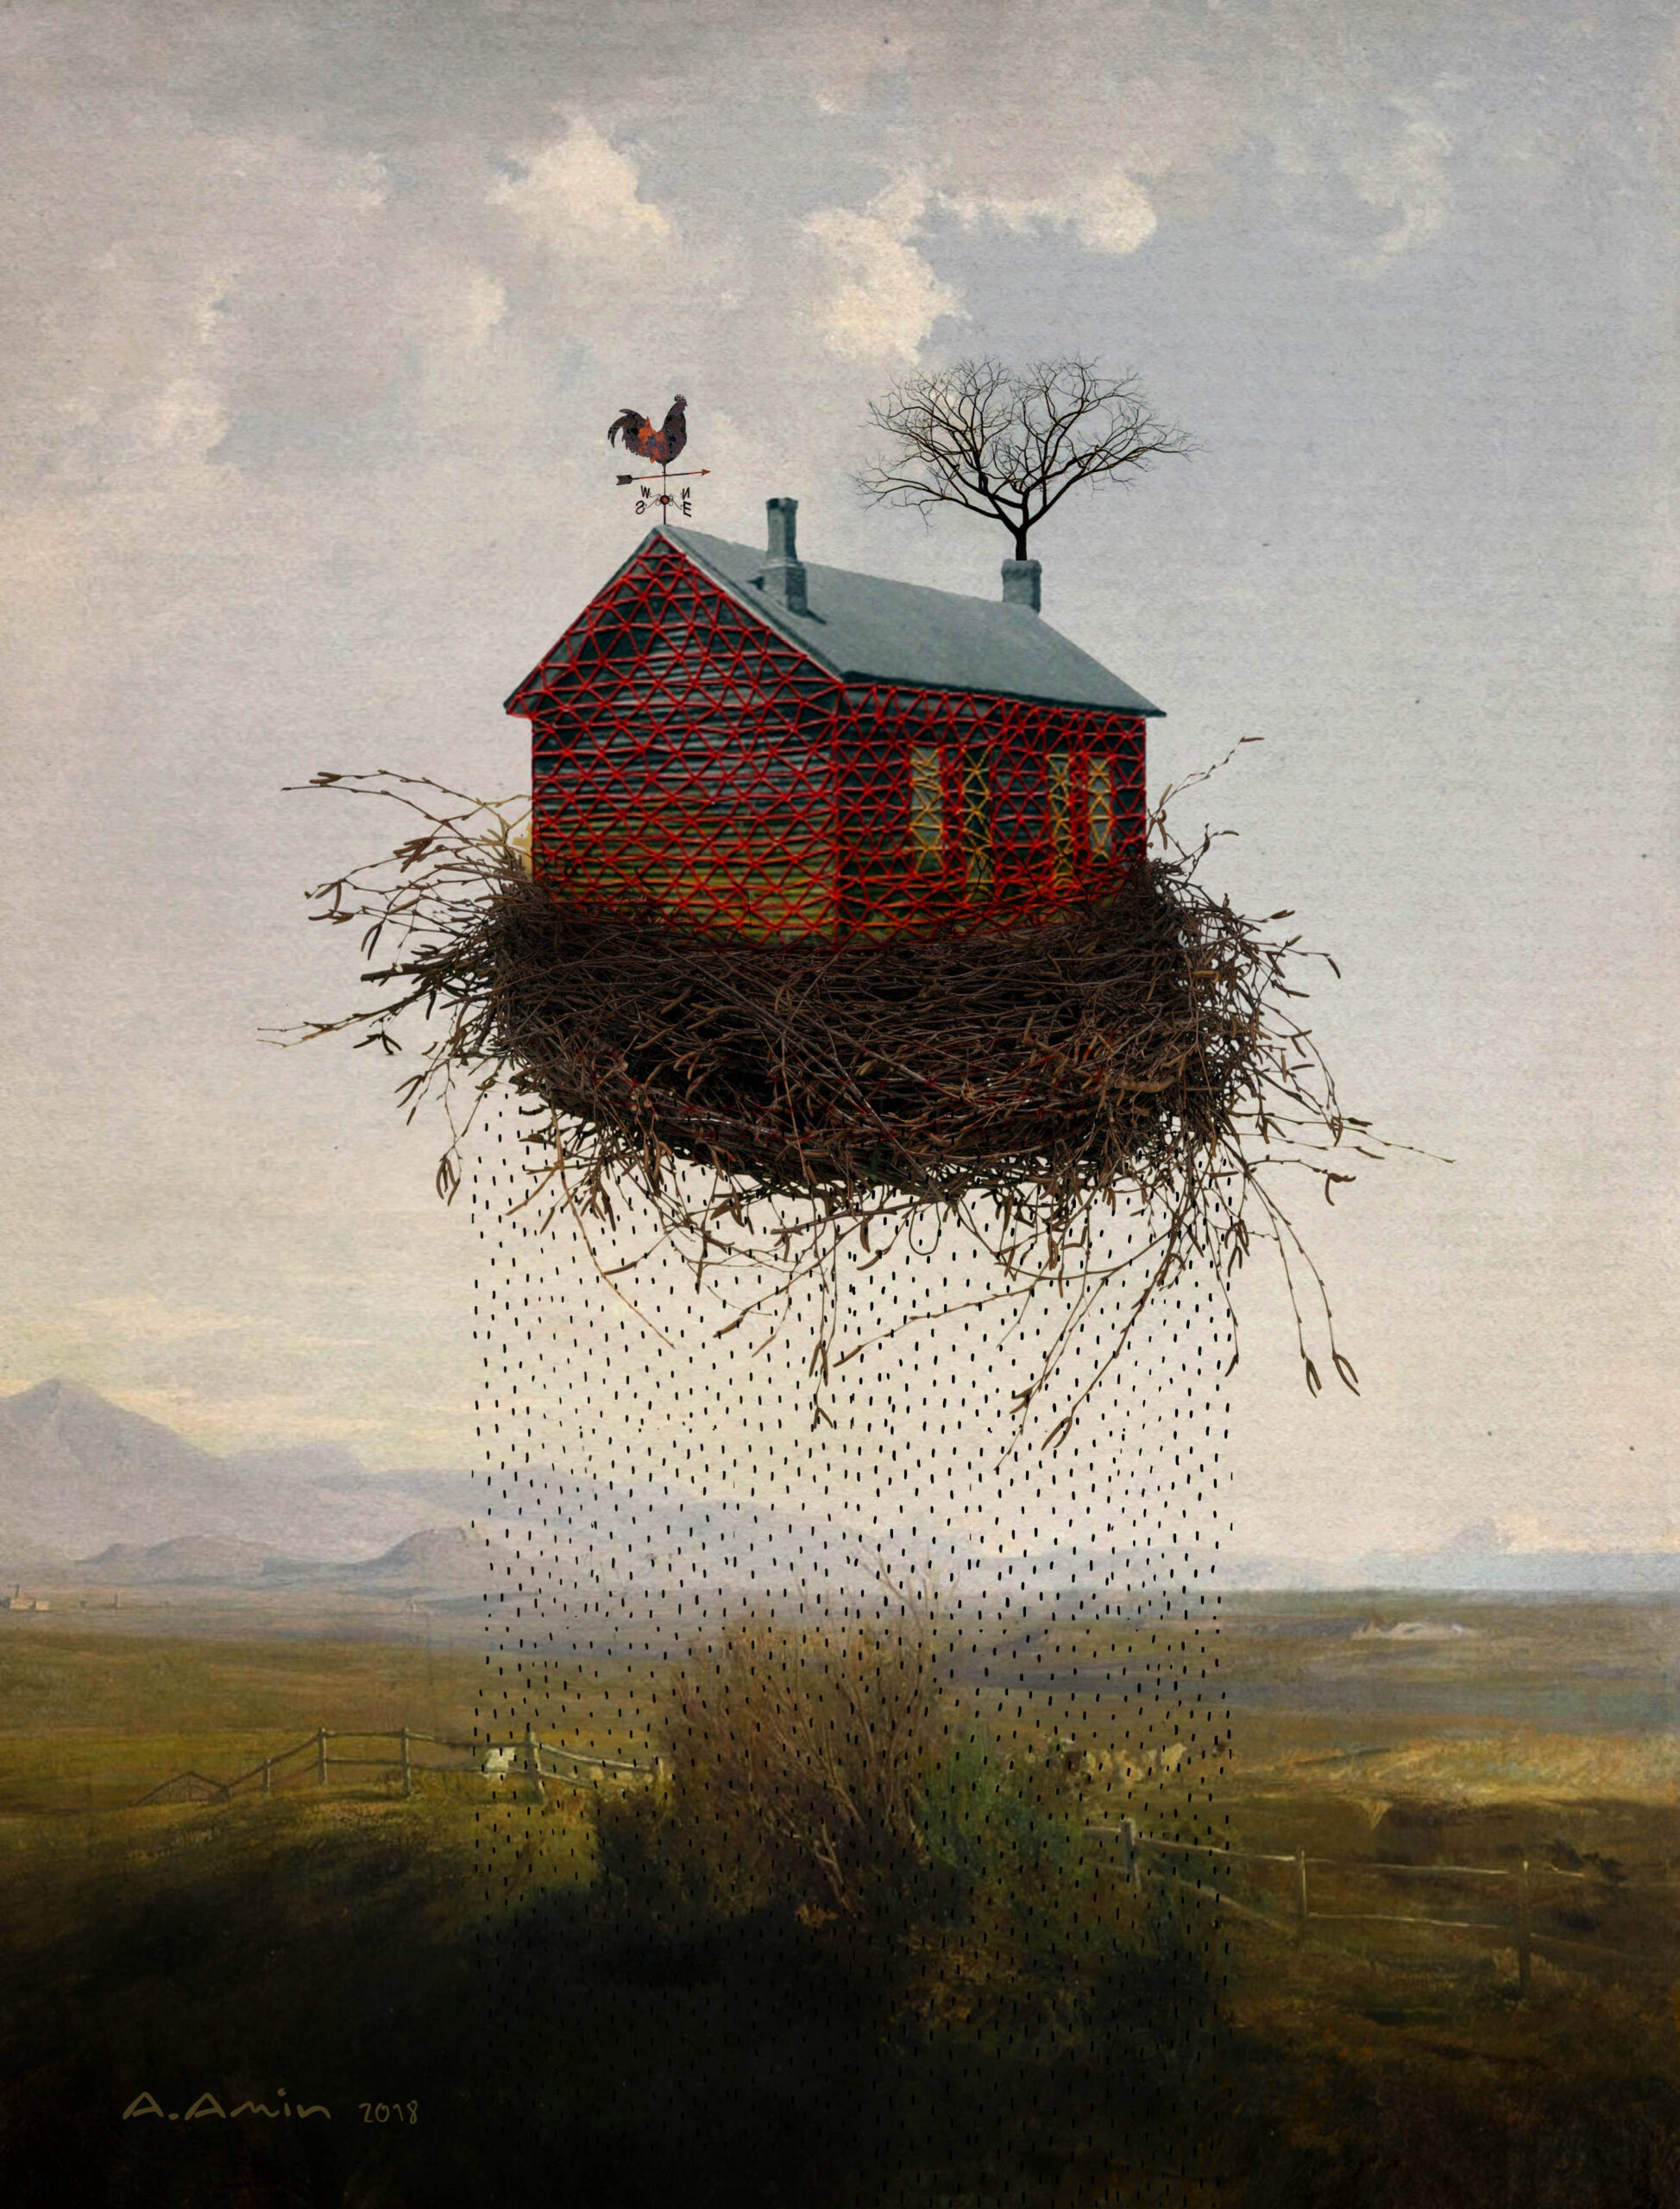 "House Illustration" by Amanj Amin